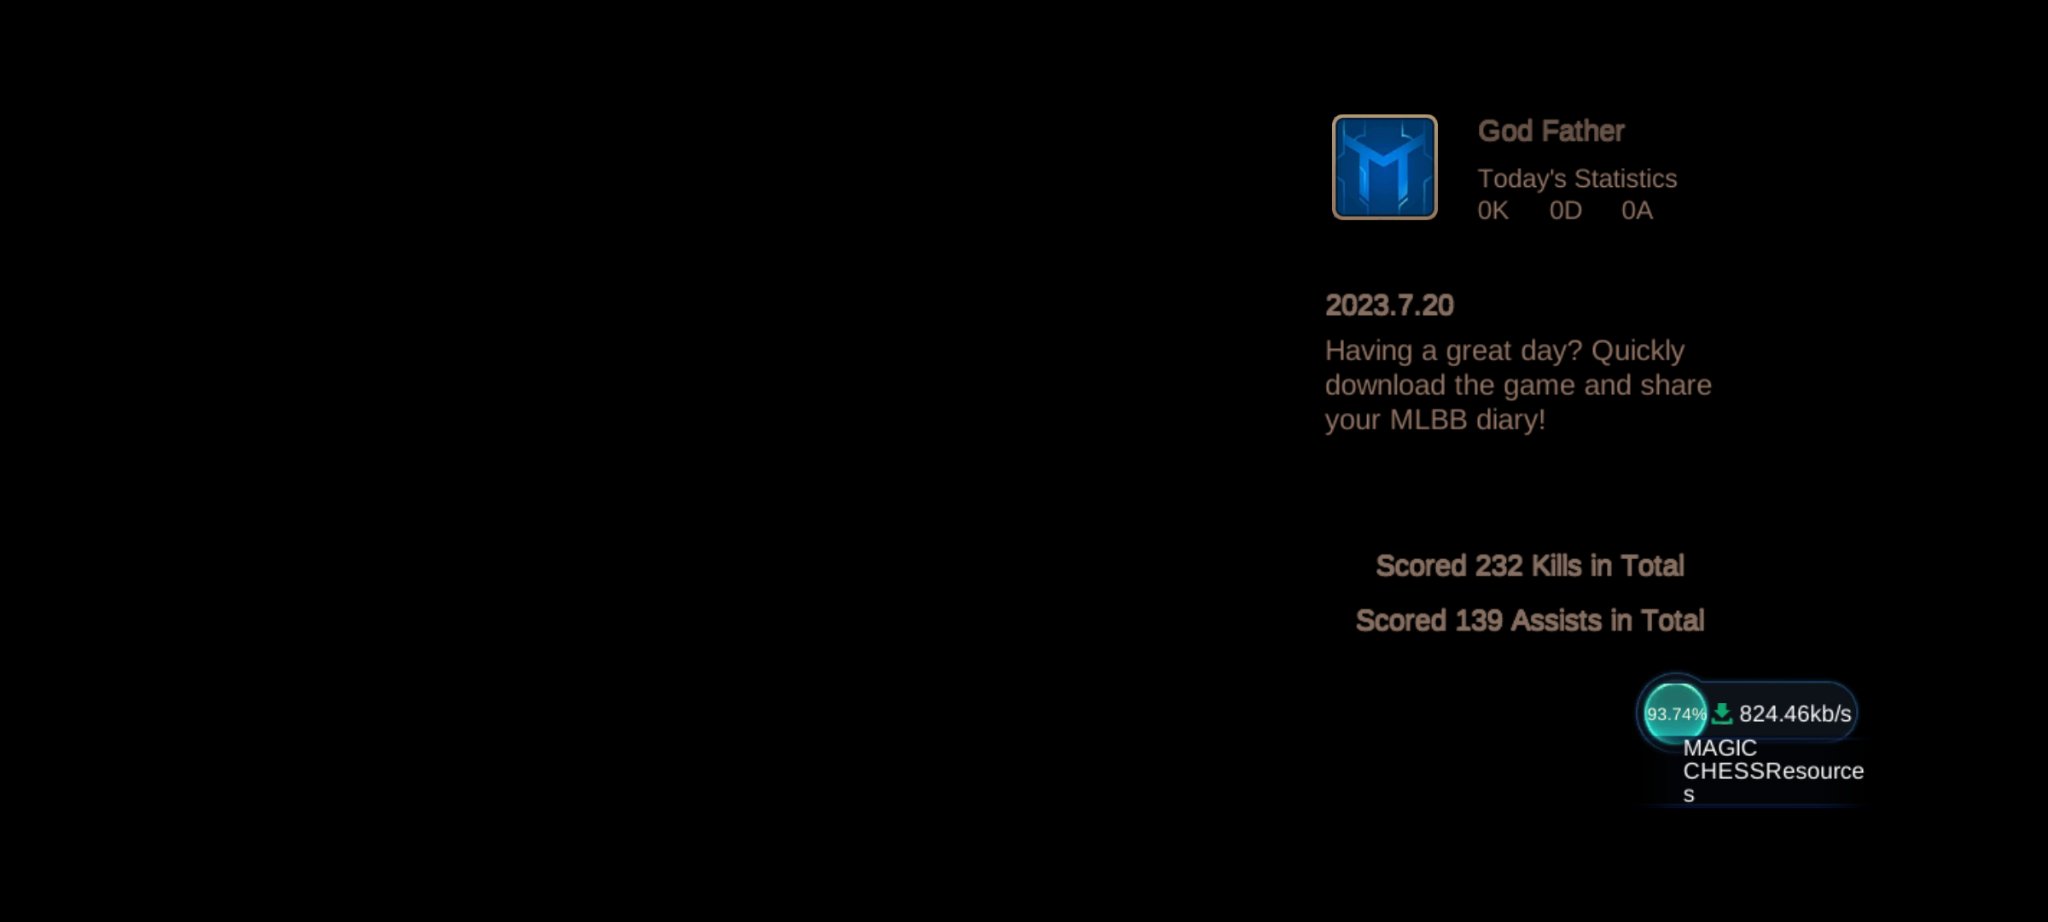 Baixar Minecraft Apk v1.18.12.01 Free Softonic Android